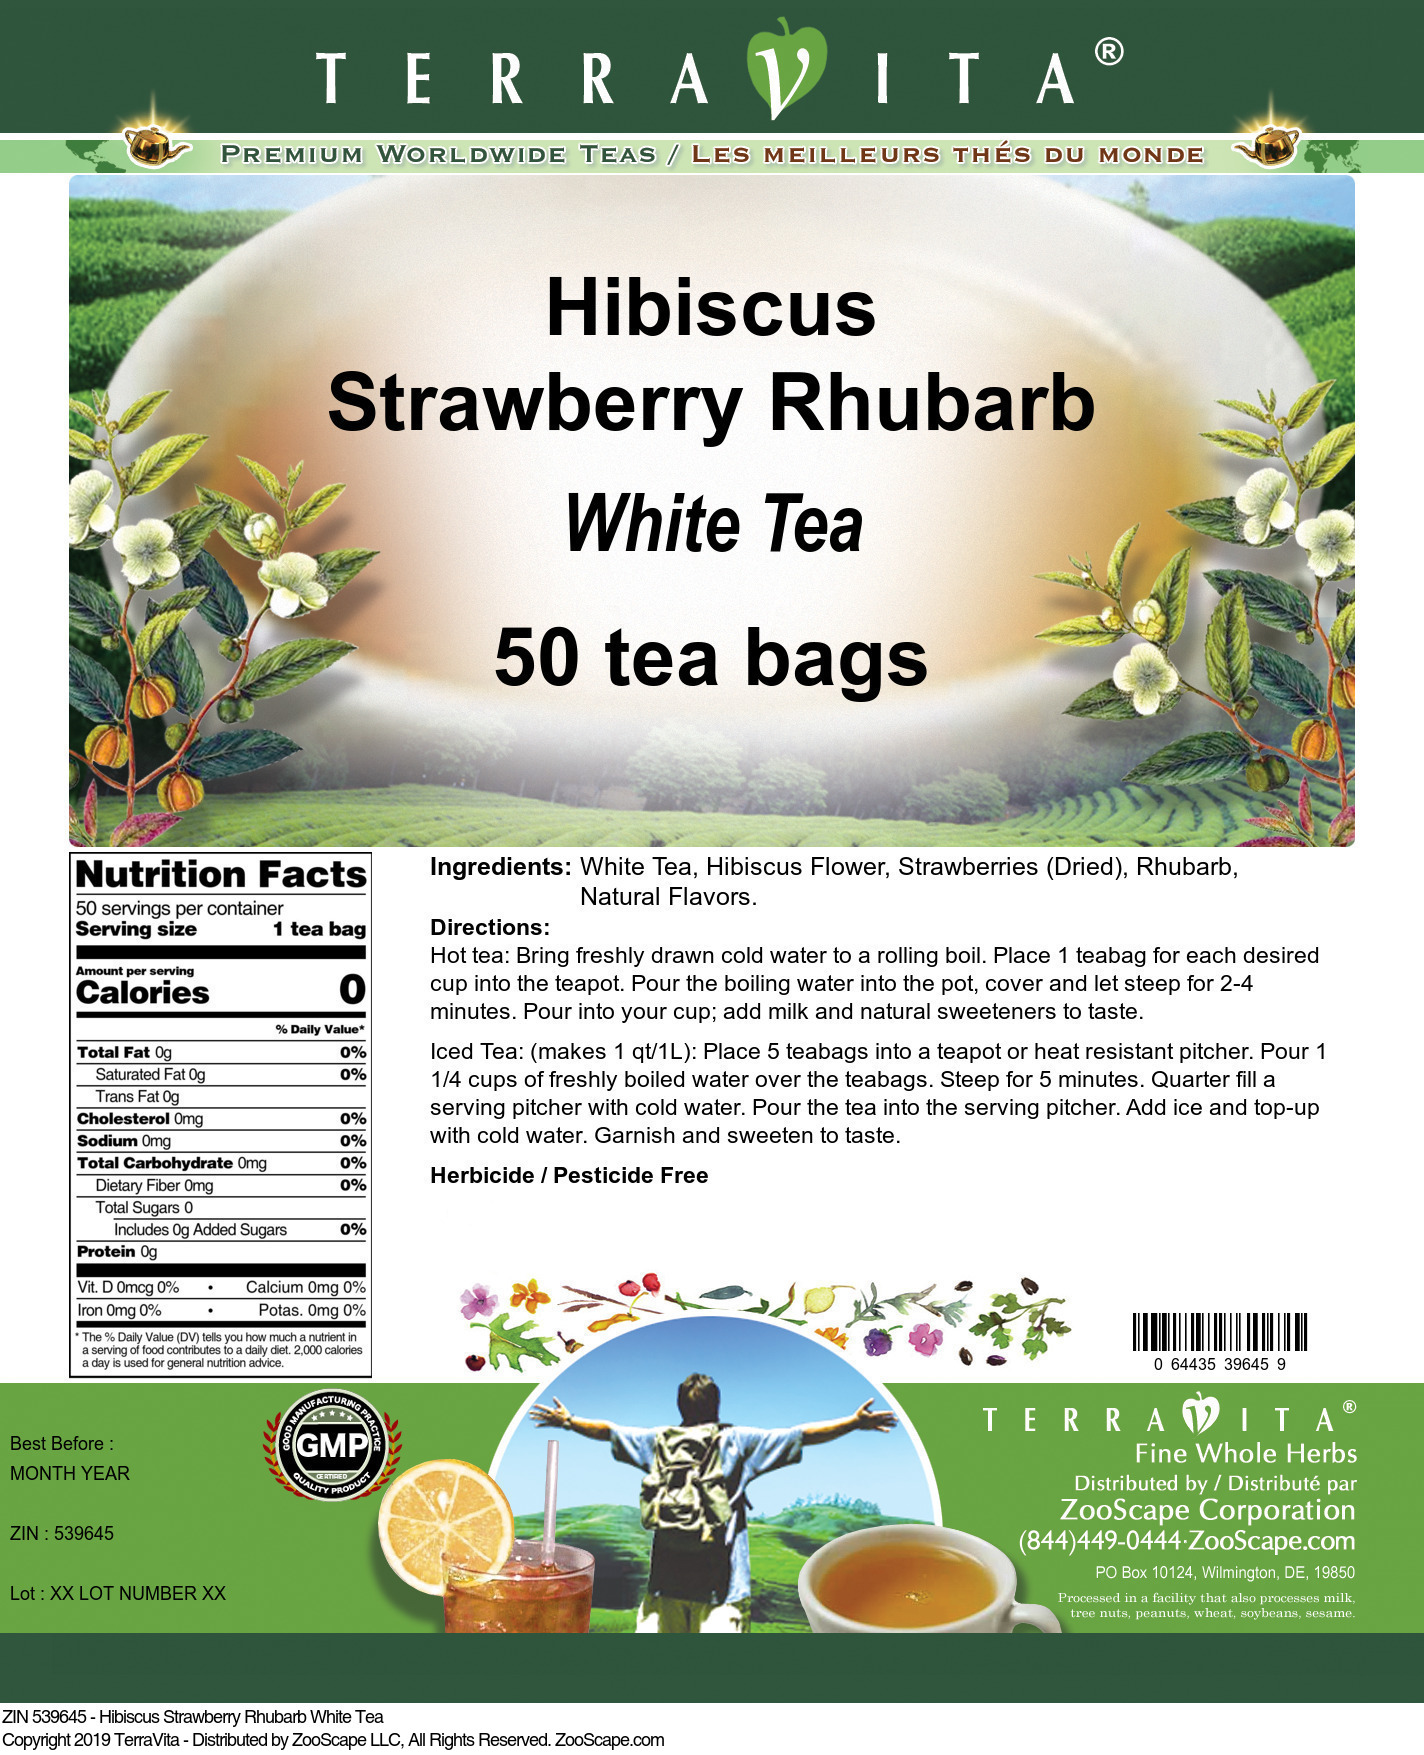 Hibiscus Strawberry Rhubarb White Tea - Label